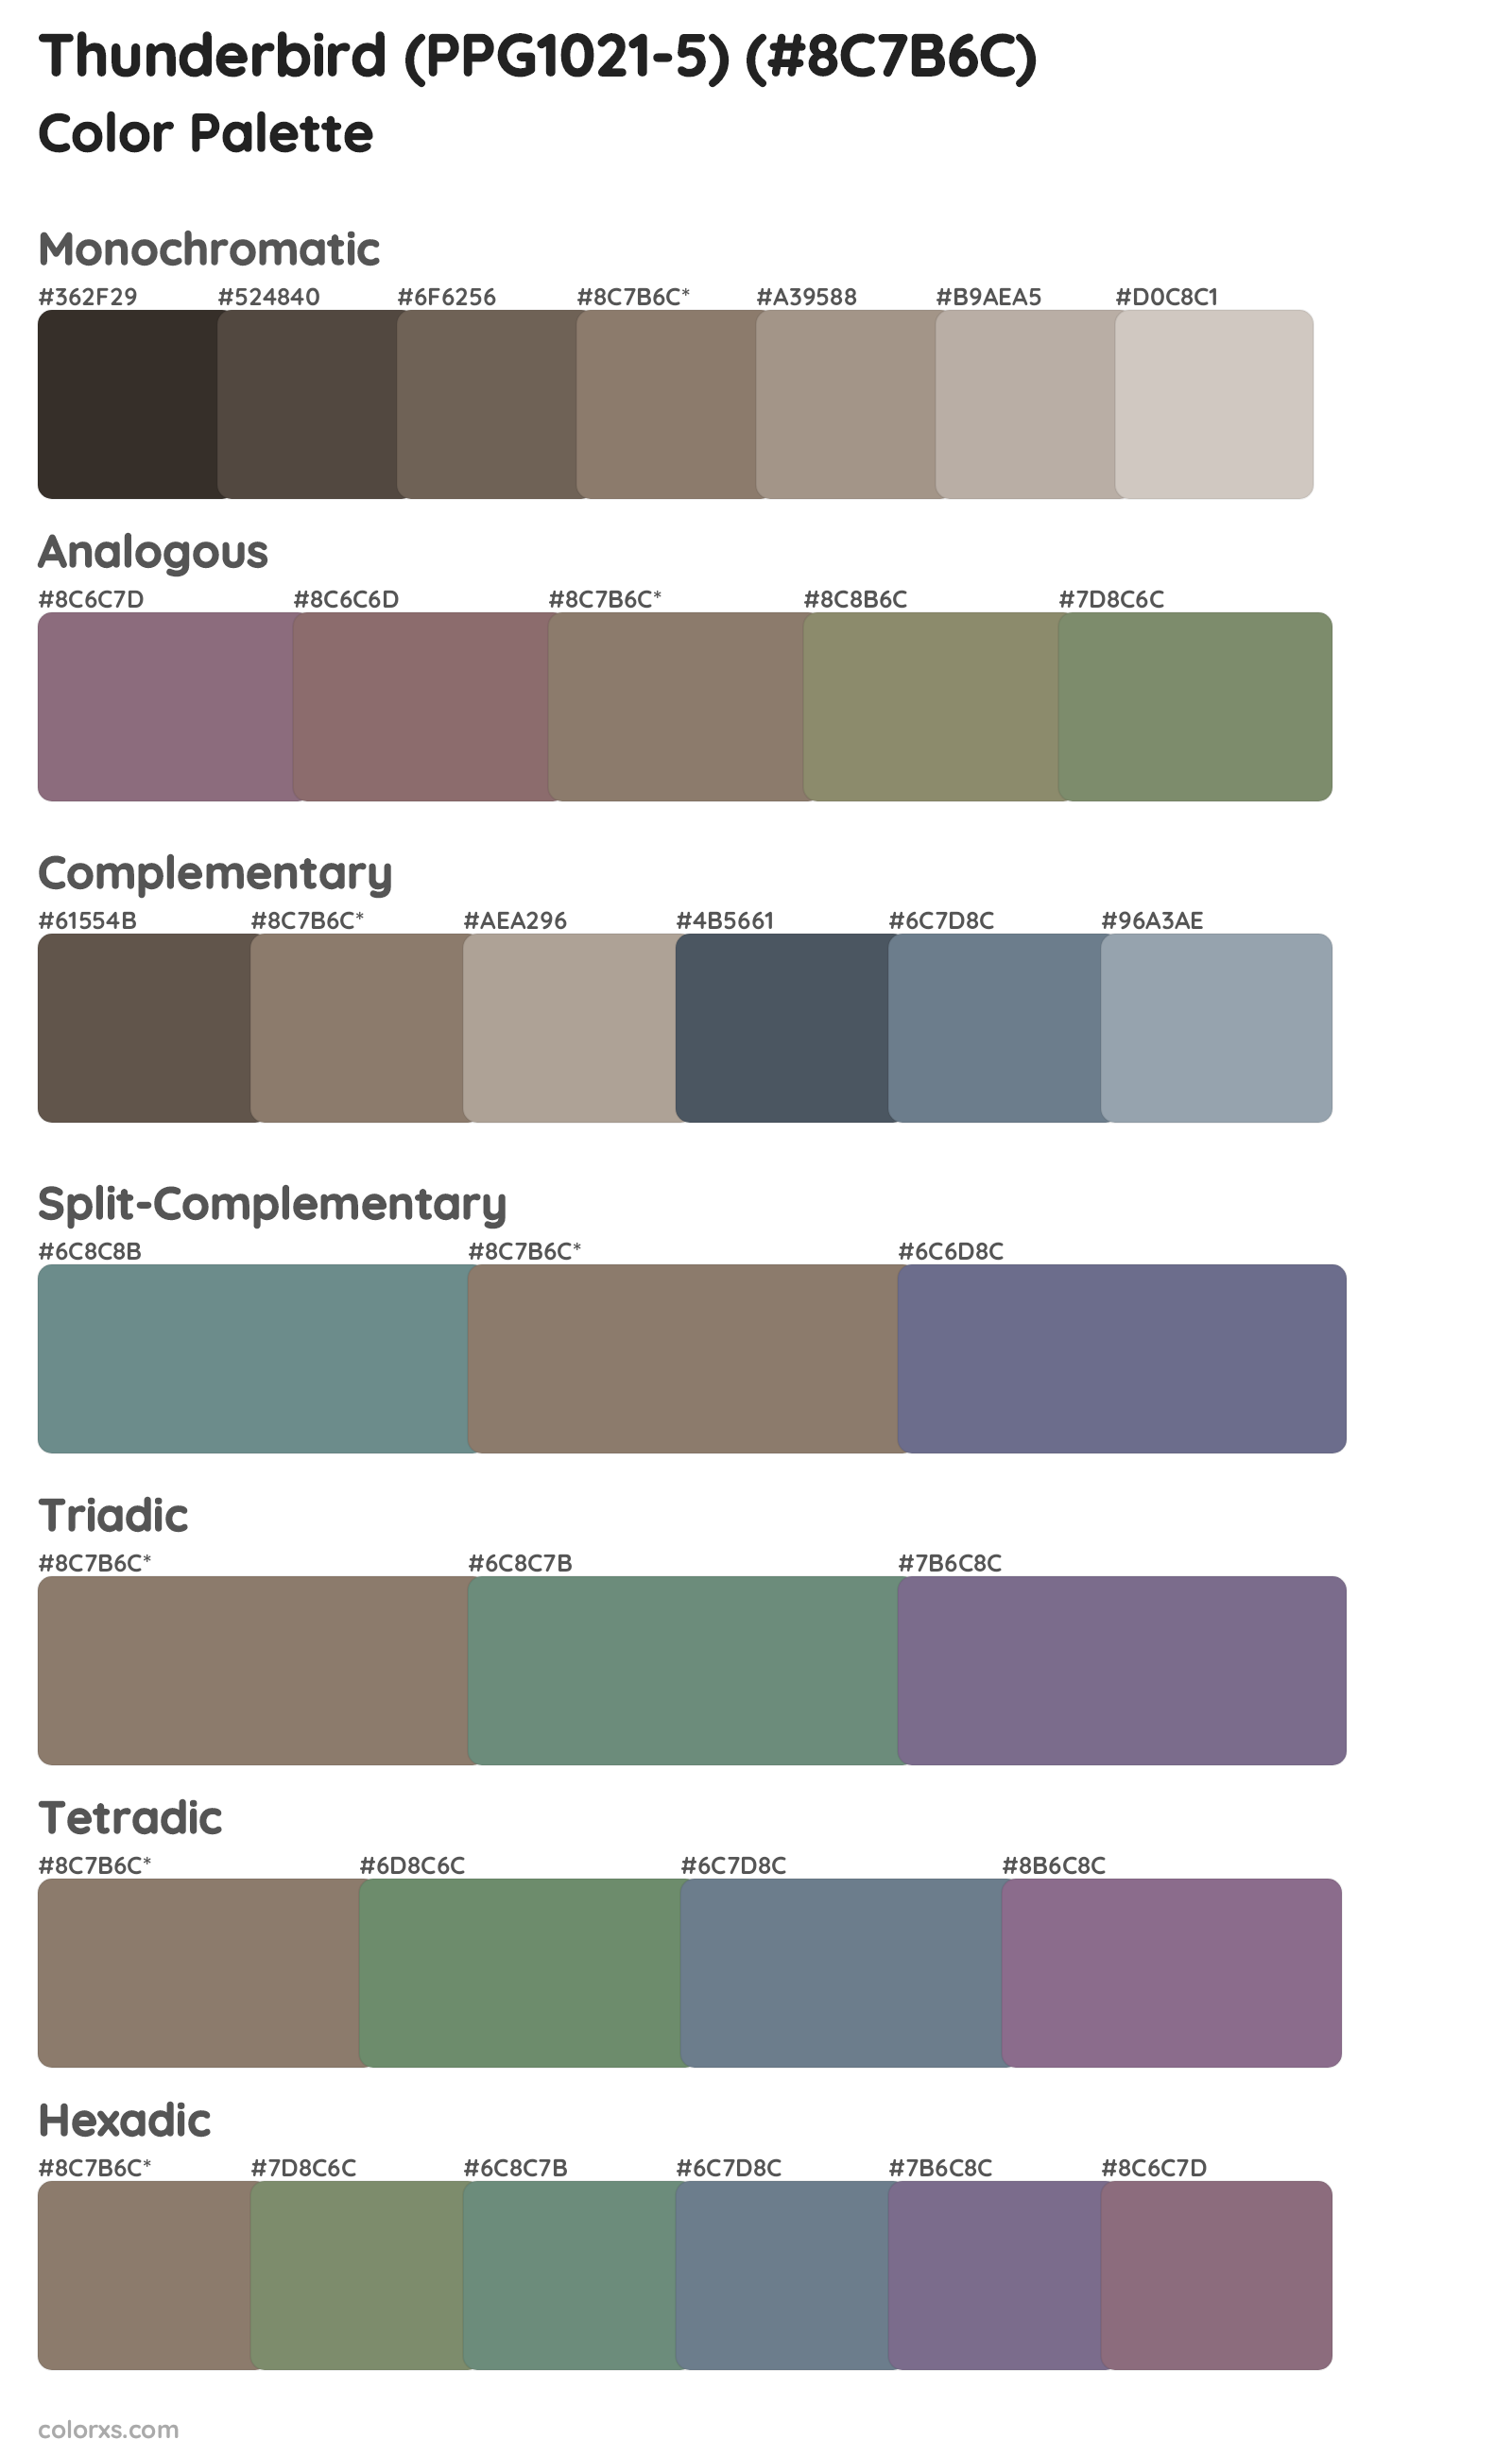 Thunderbird (PPG1021-5) Color Scheme Palettes